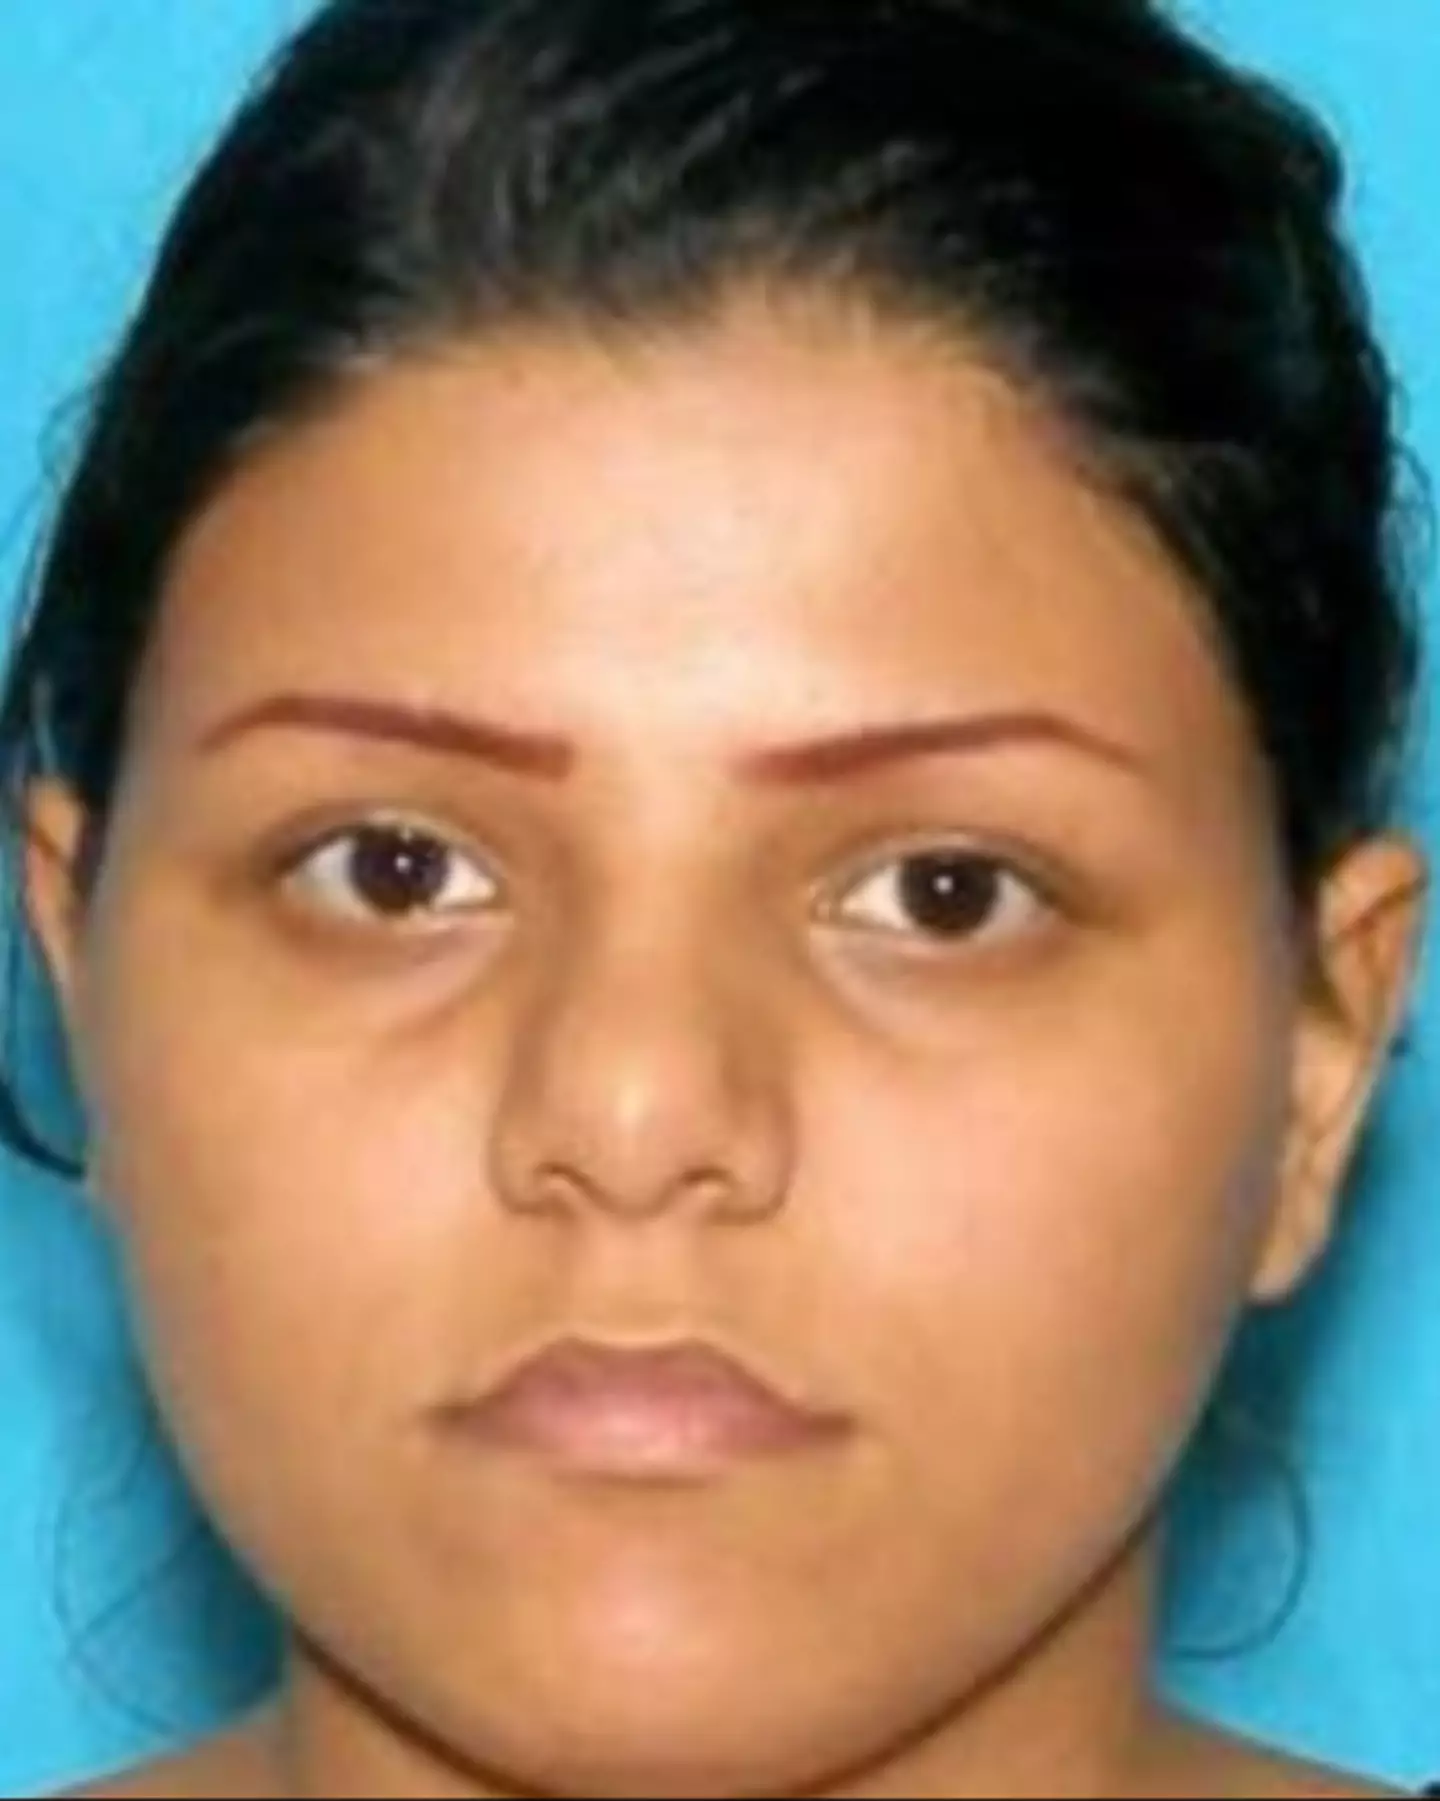 Esmeralda Lopez-Lopez was taken into custody in 2019.